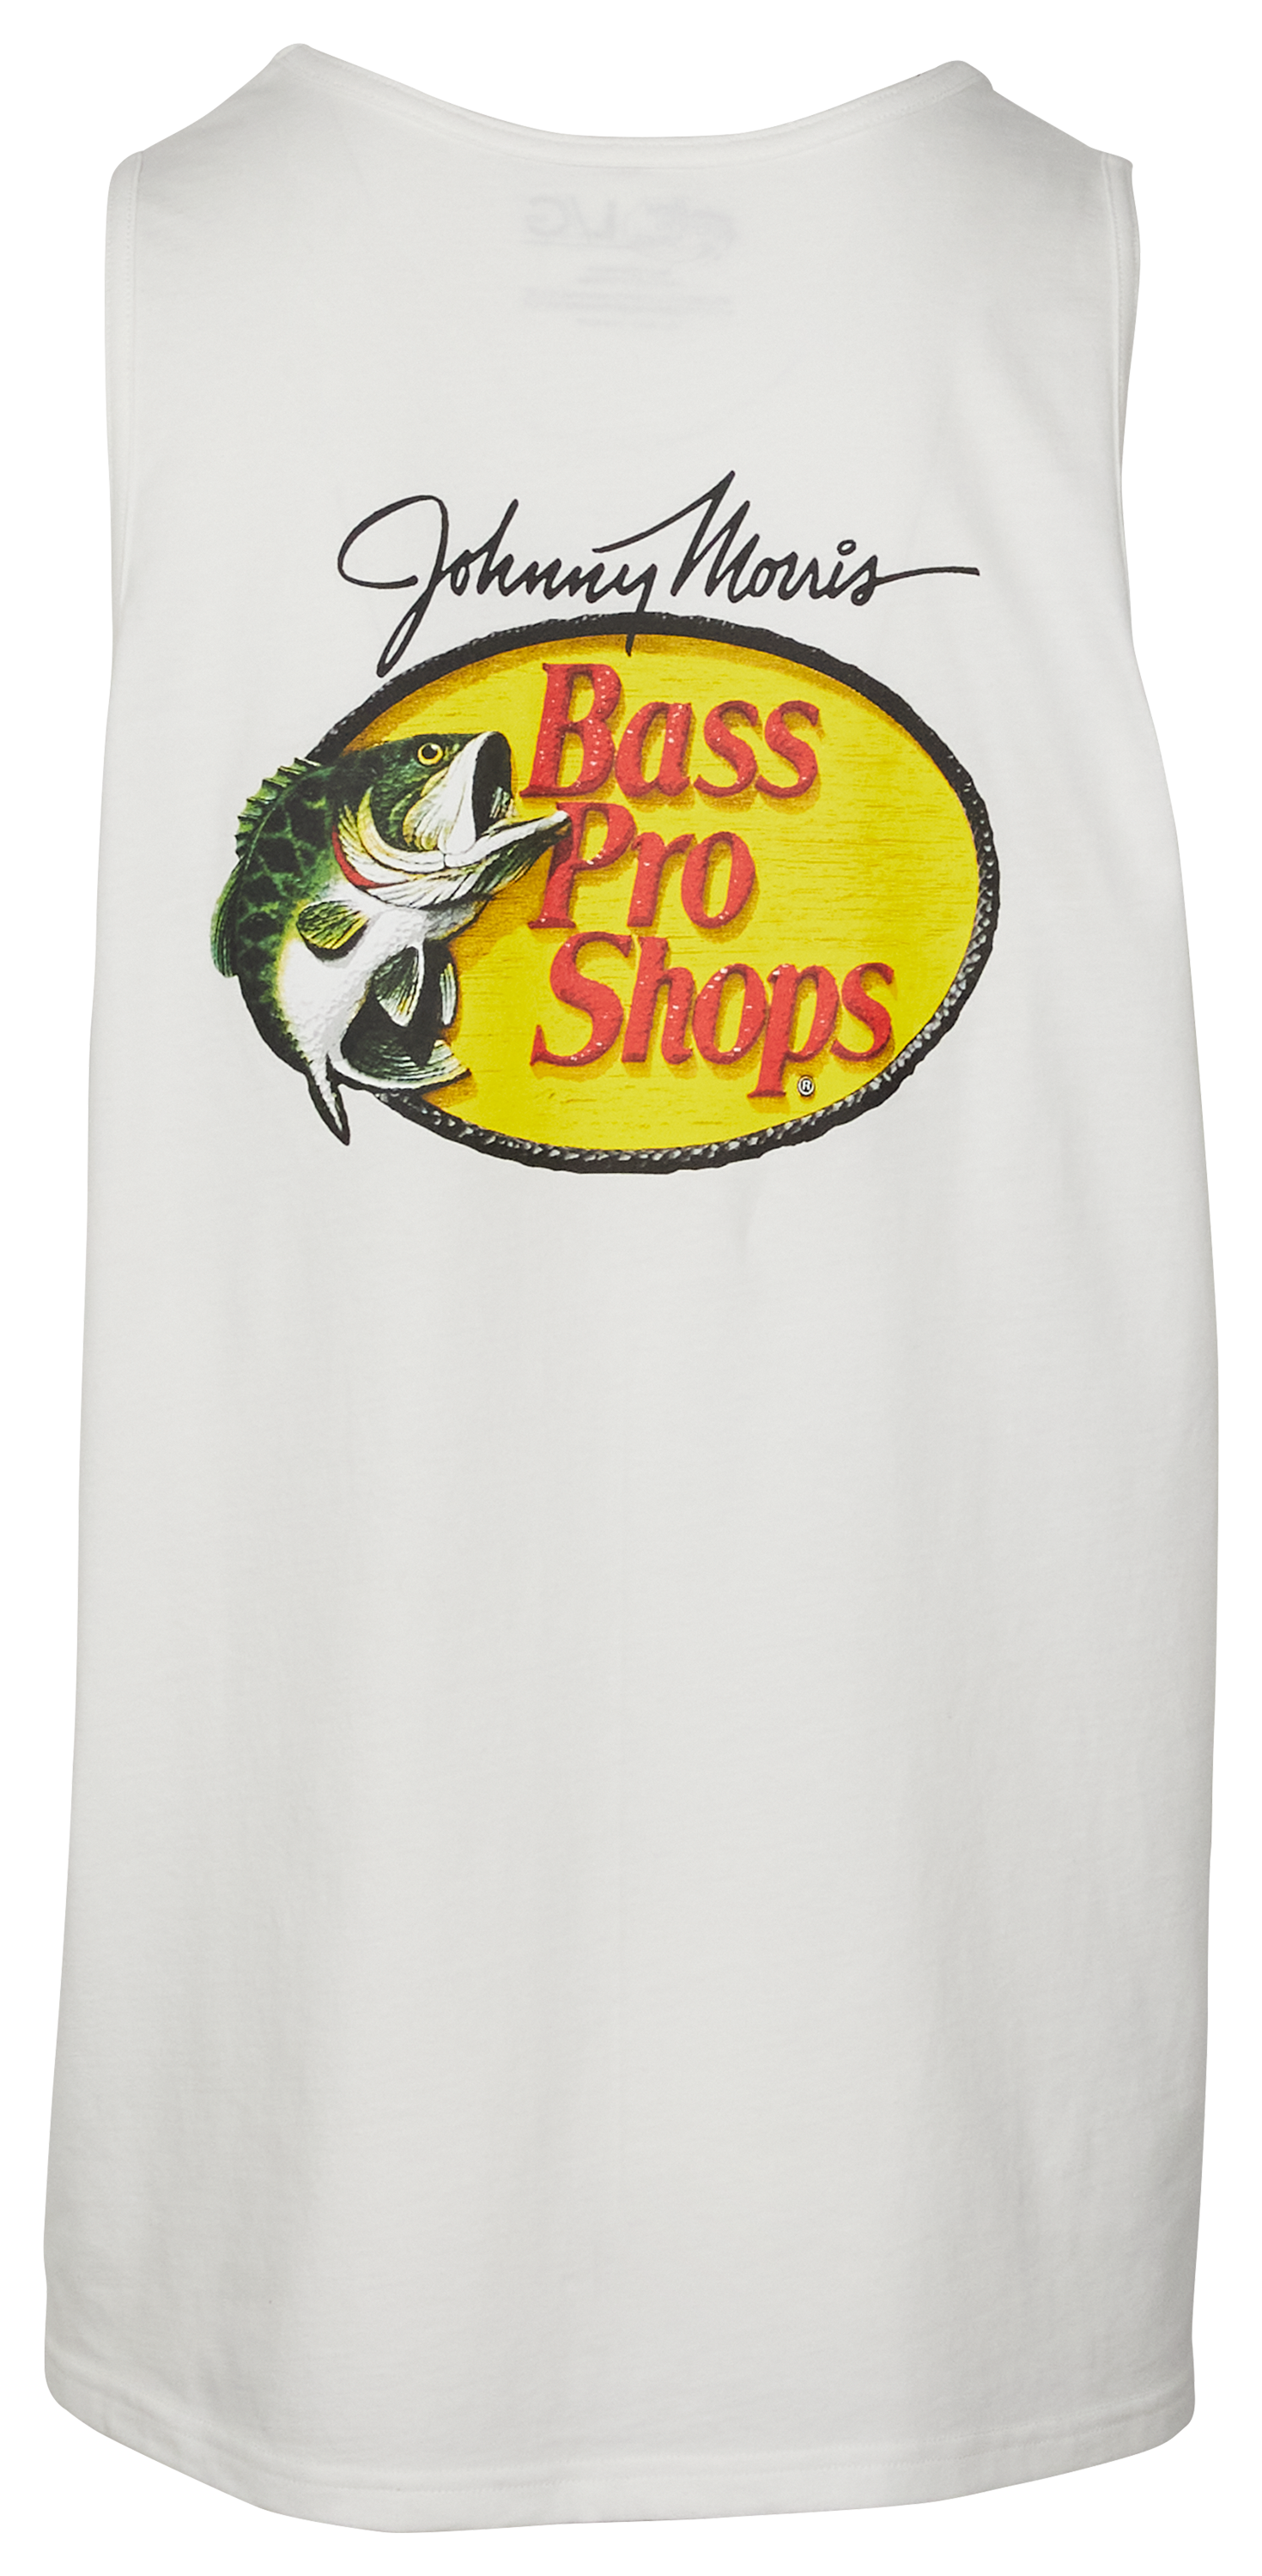 Bass Pro Shops Woodcut Long-Sleeve T-Shirt for Men